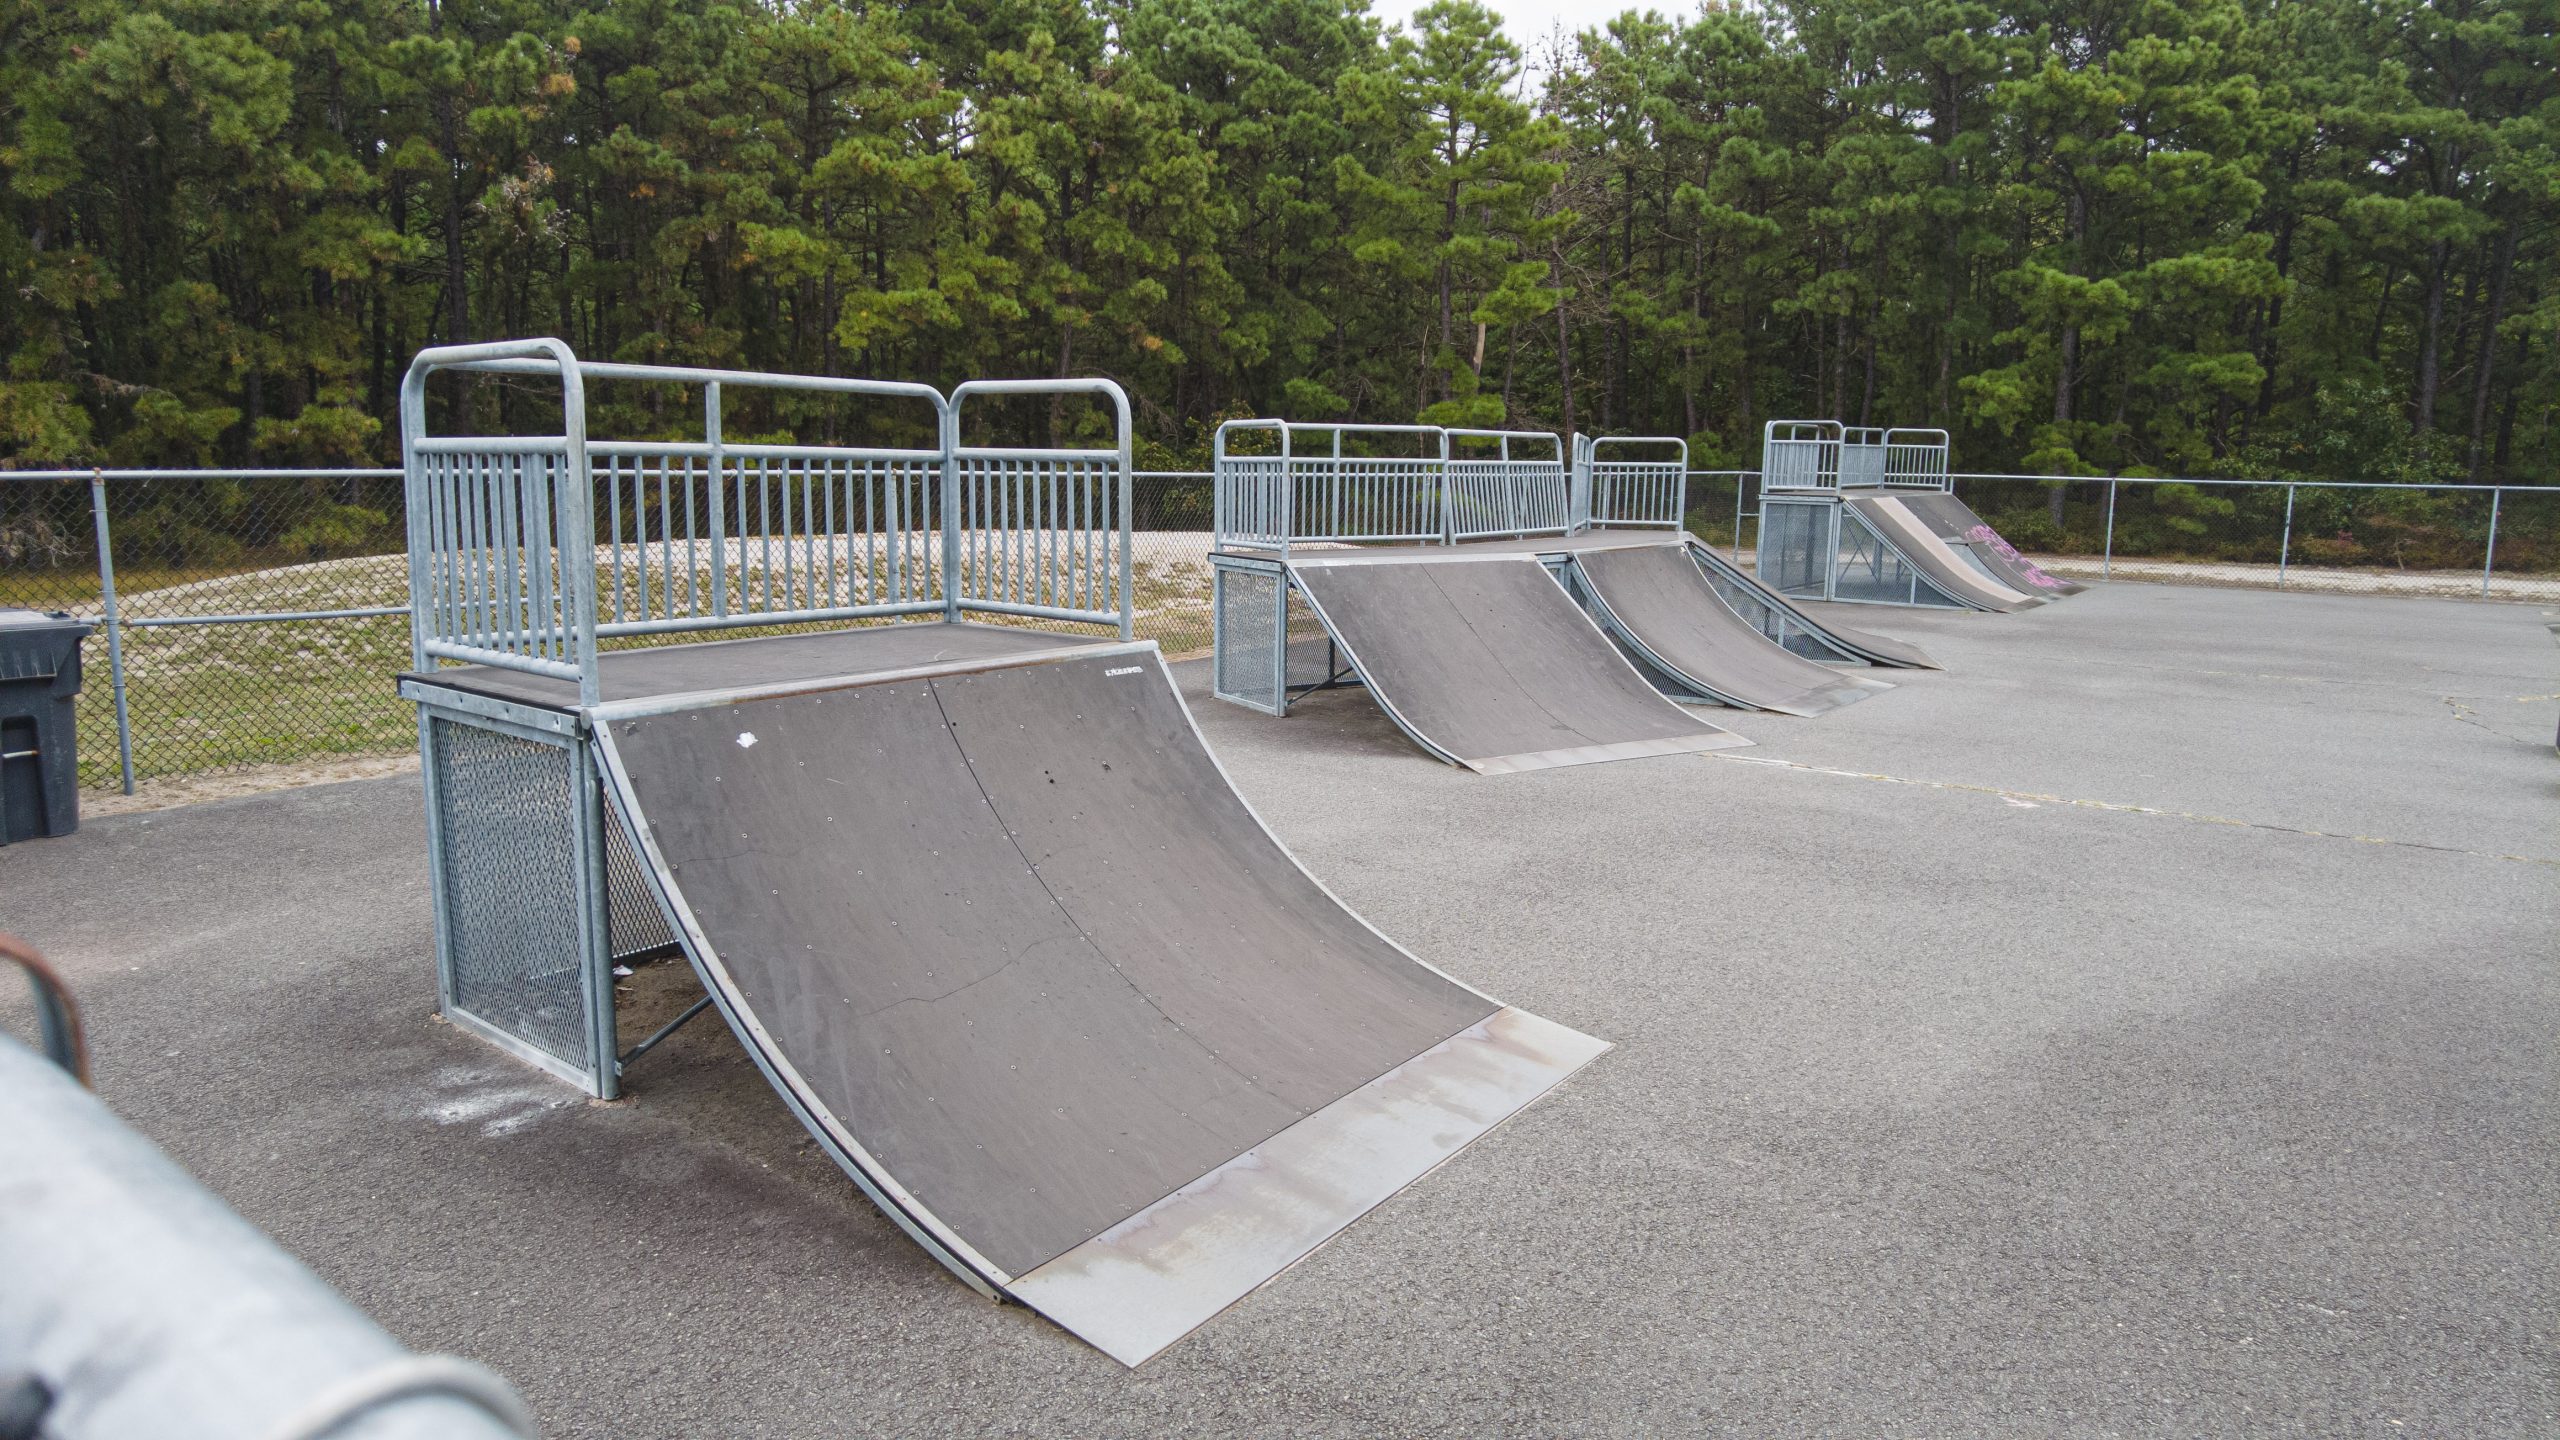 The skate park at the Drum Point Sports Complex, Brick, N.J., Sept. 2022. (Photo: Daniel Nee)